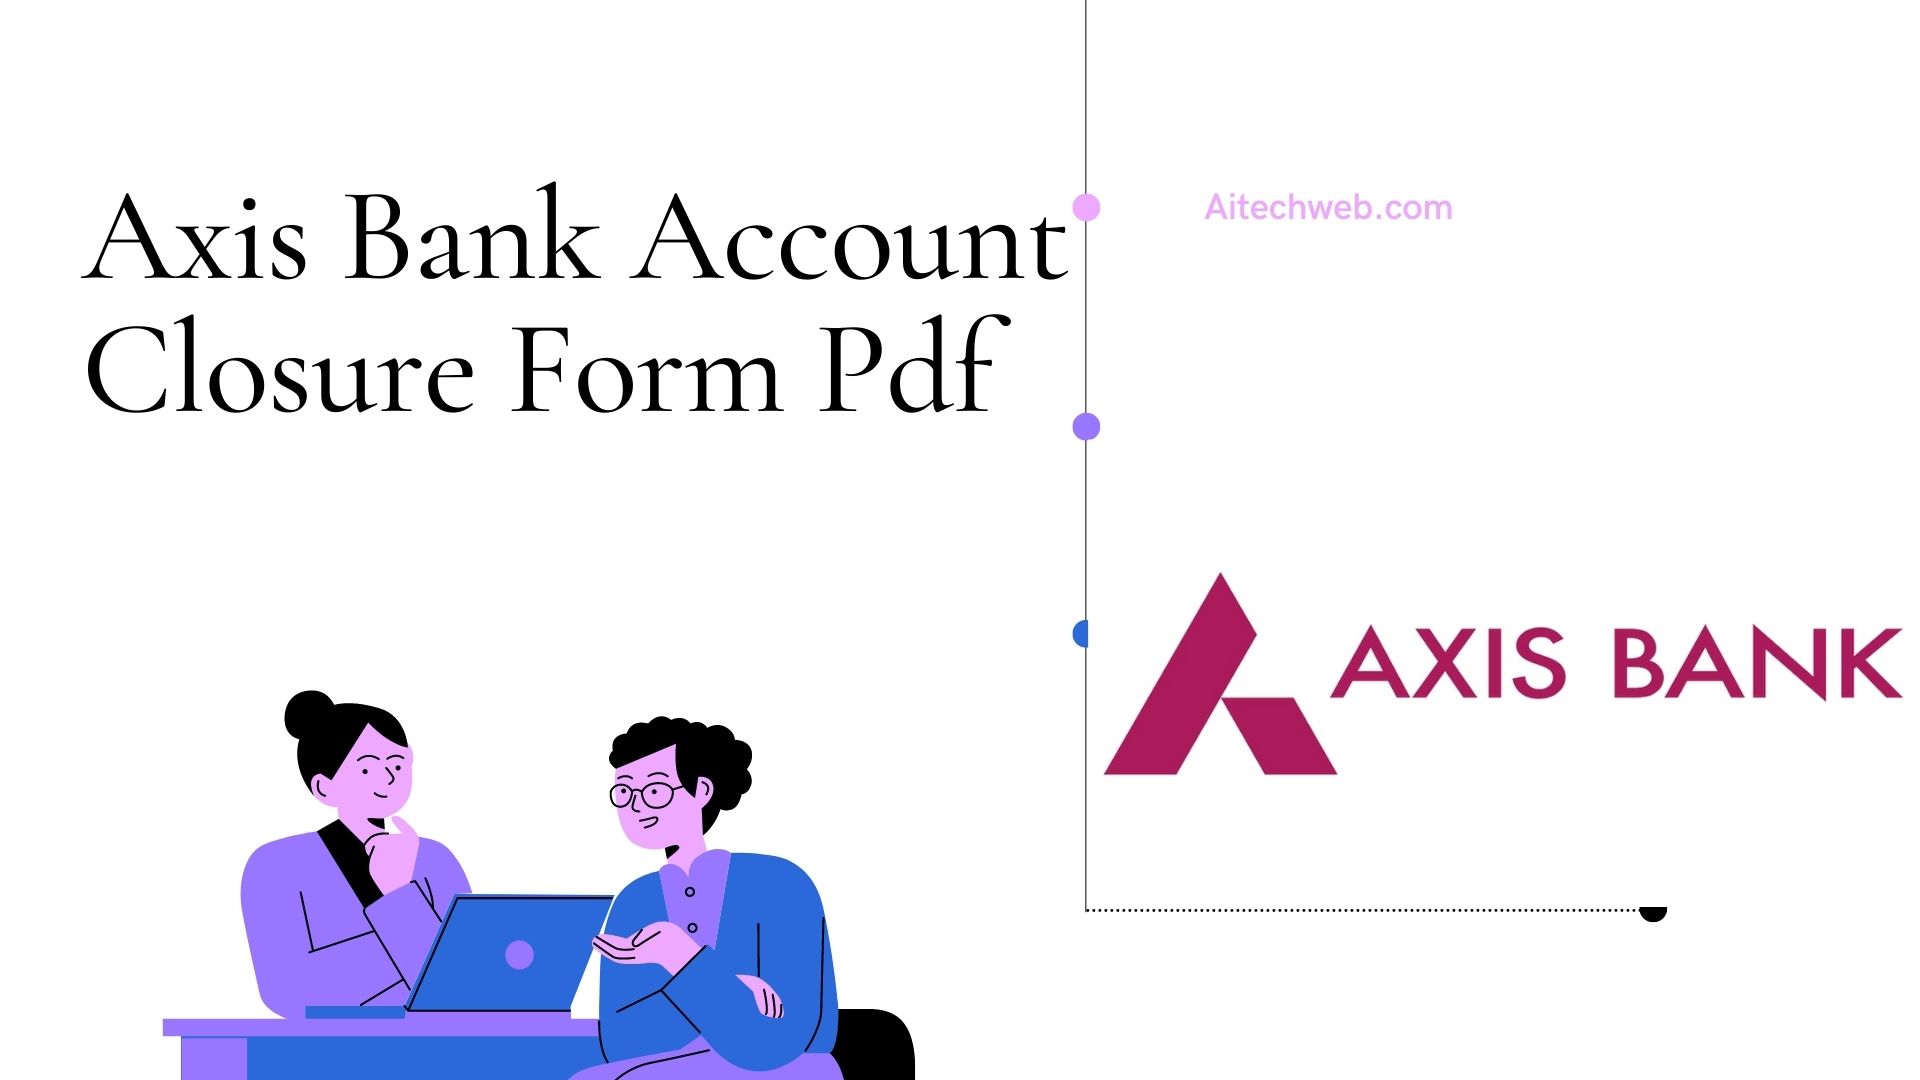 Download Axis Bank Account Closure Form pdf